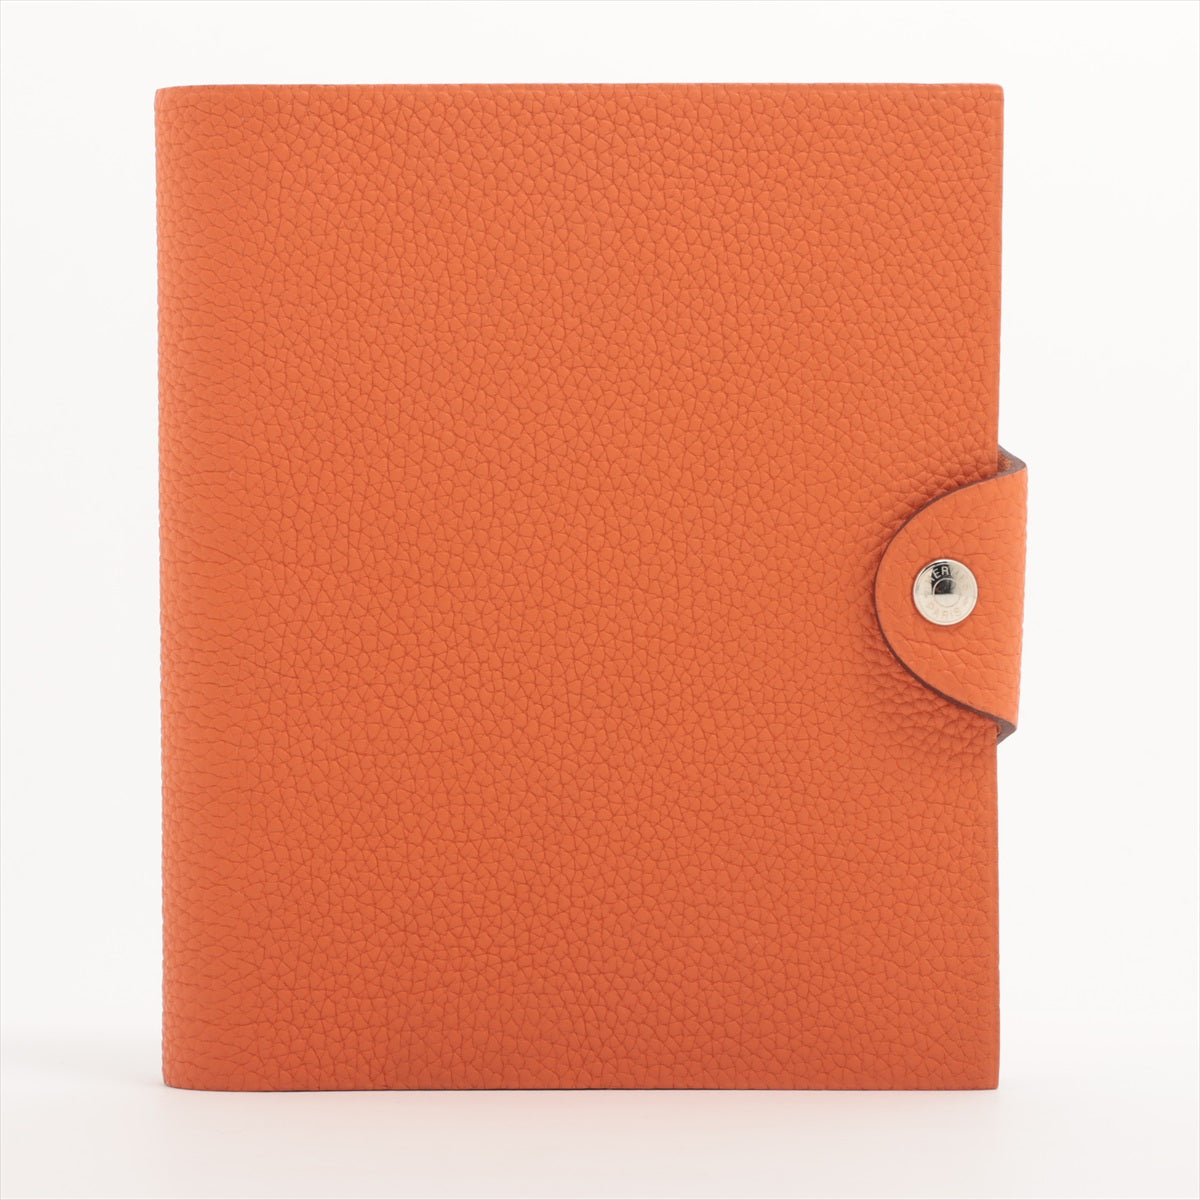 Hermès Ulysse PM Togo Notebook cover Orange Silver Metal fittings □G:2003